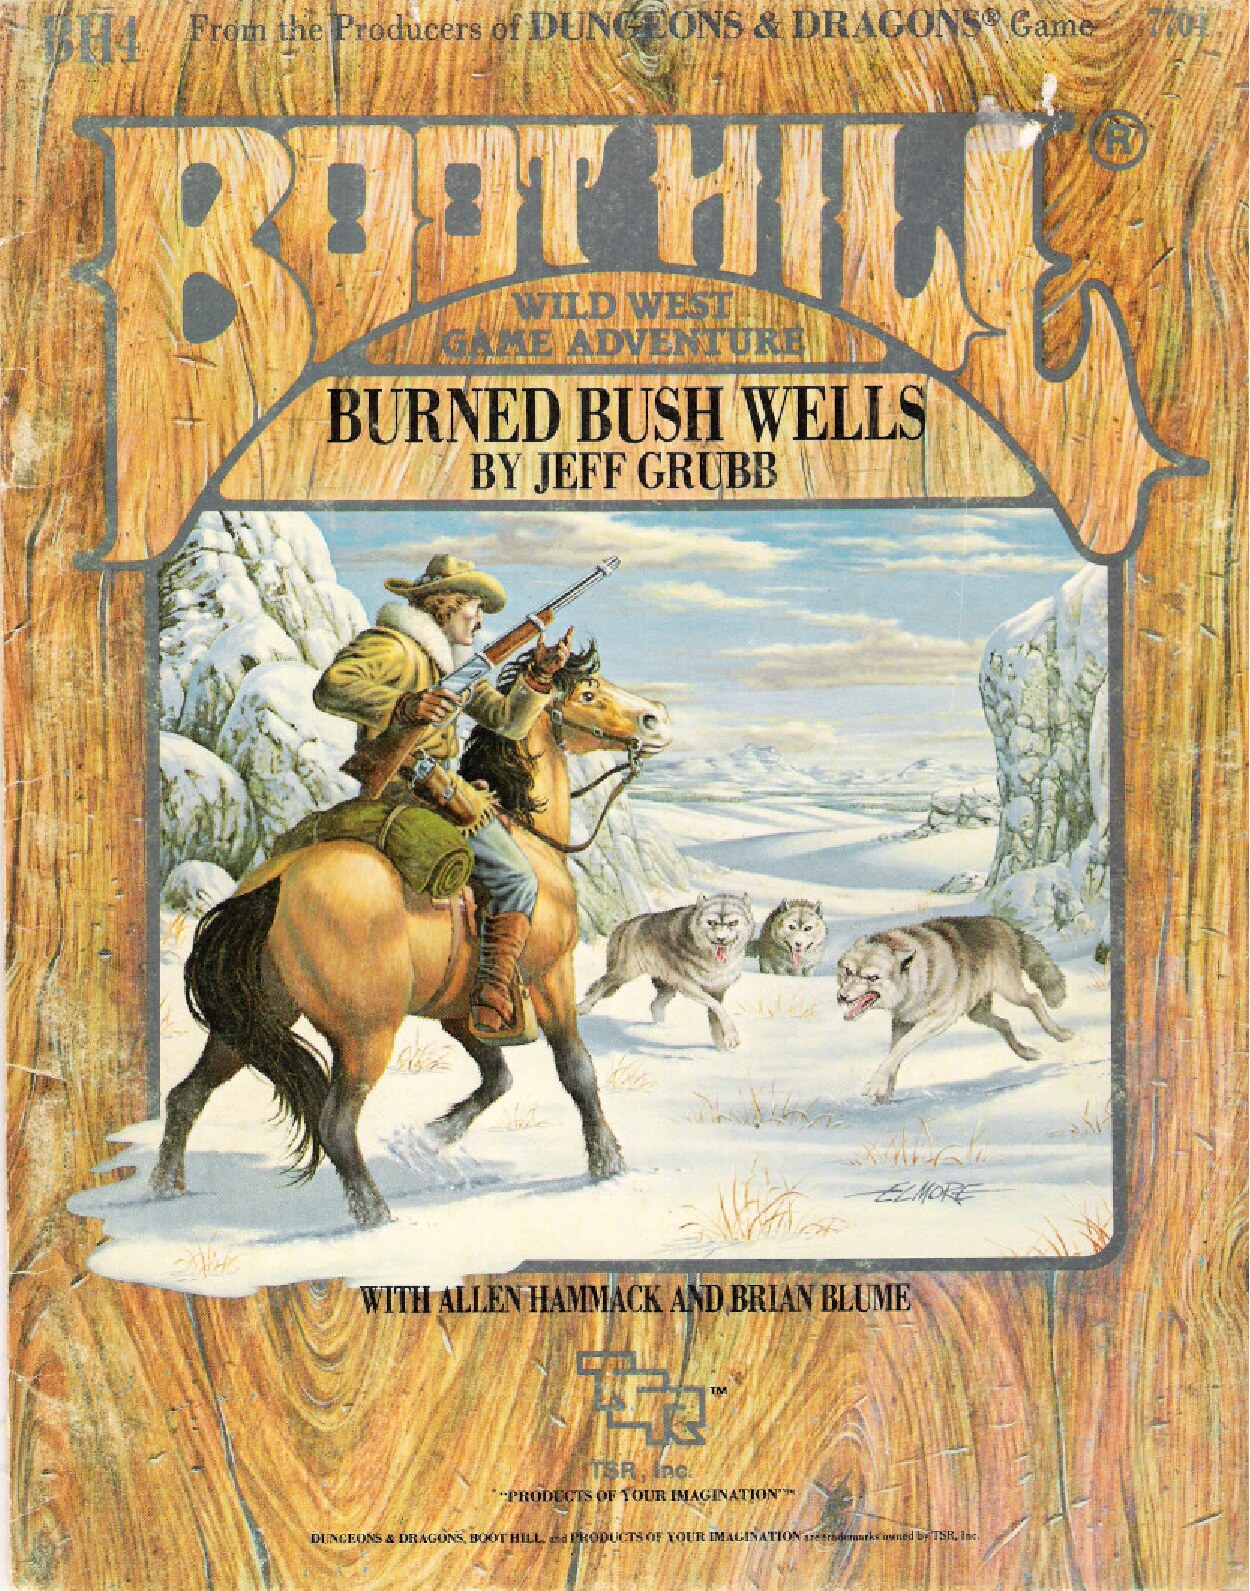 BH4 - Burned Bush Wells